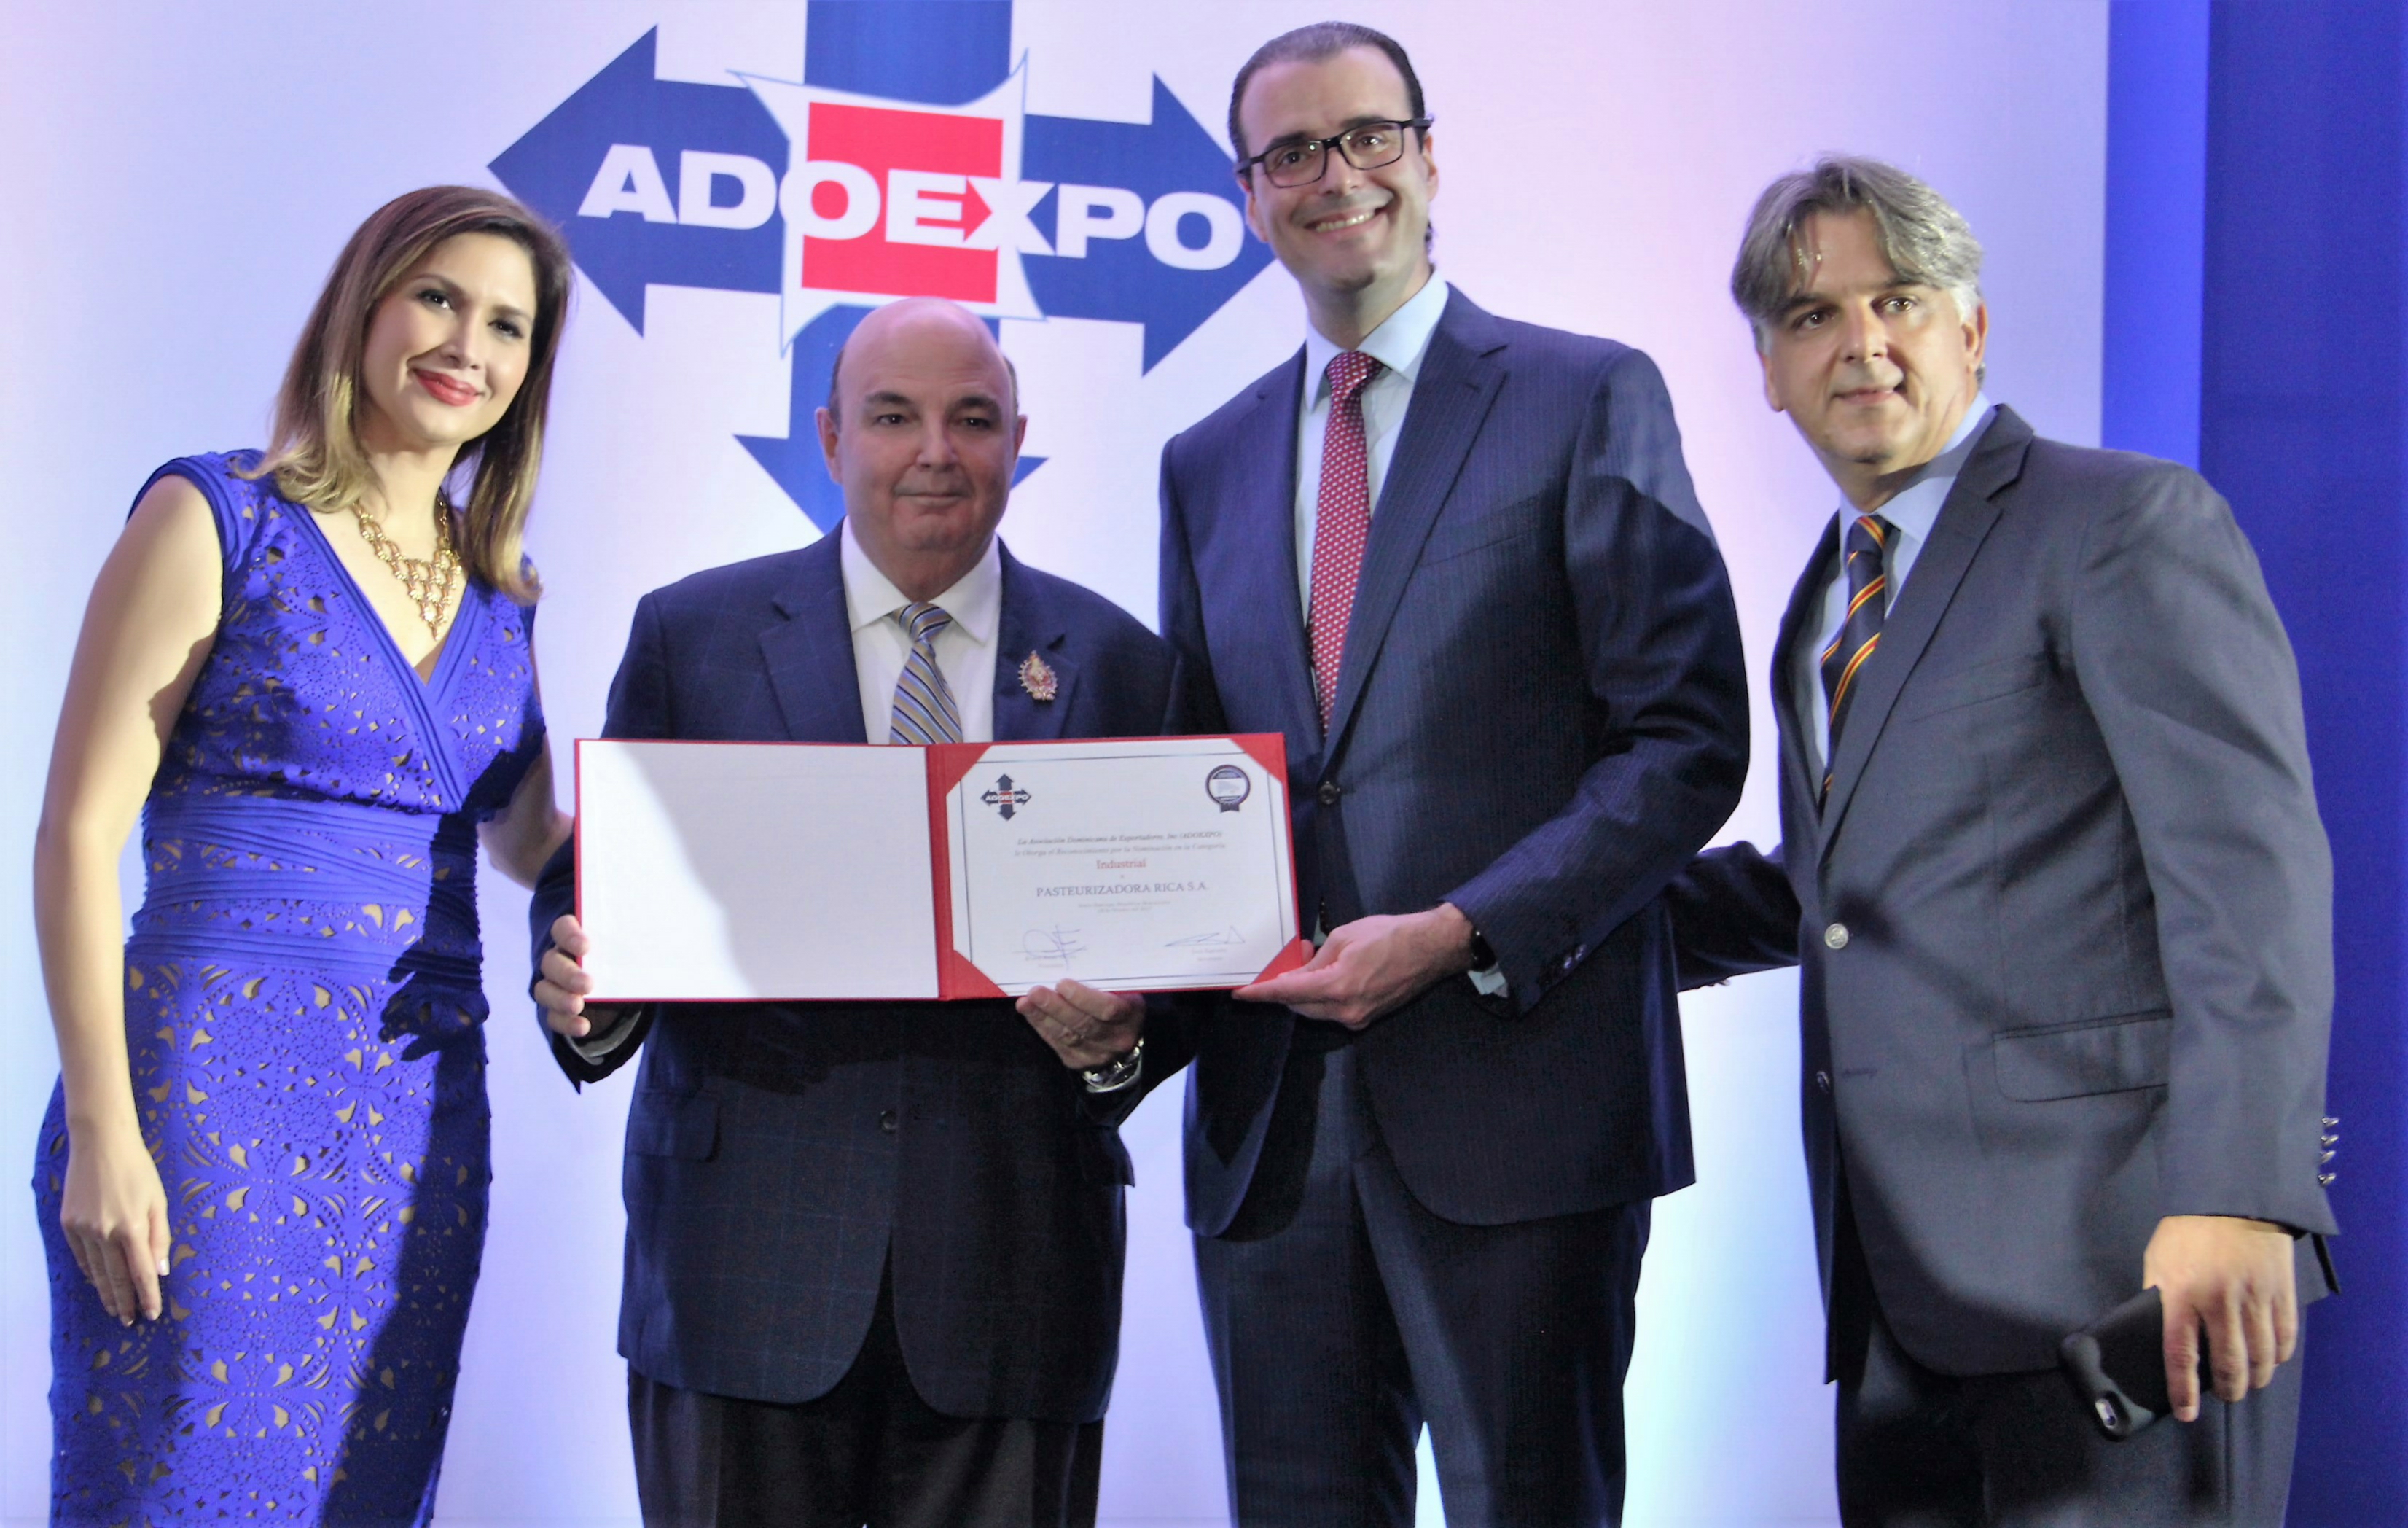  ADOEXPO nomina empresas para los Premios Excelencia Exportadora 2017